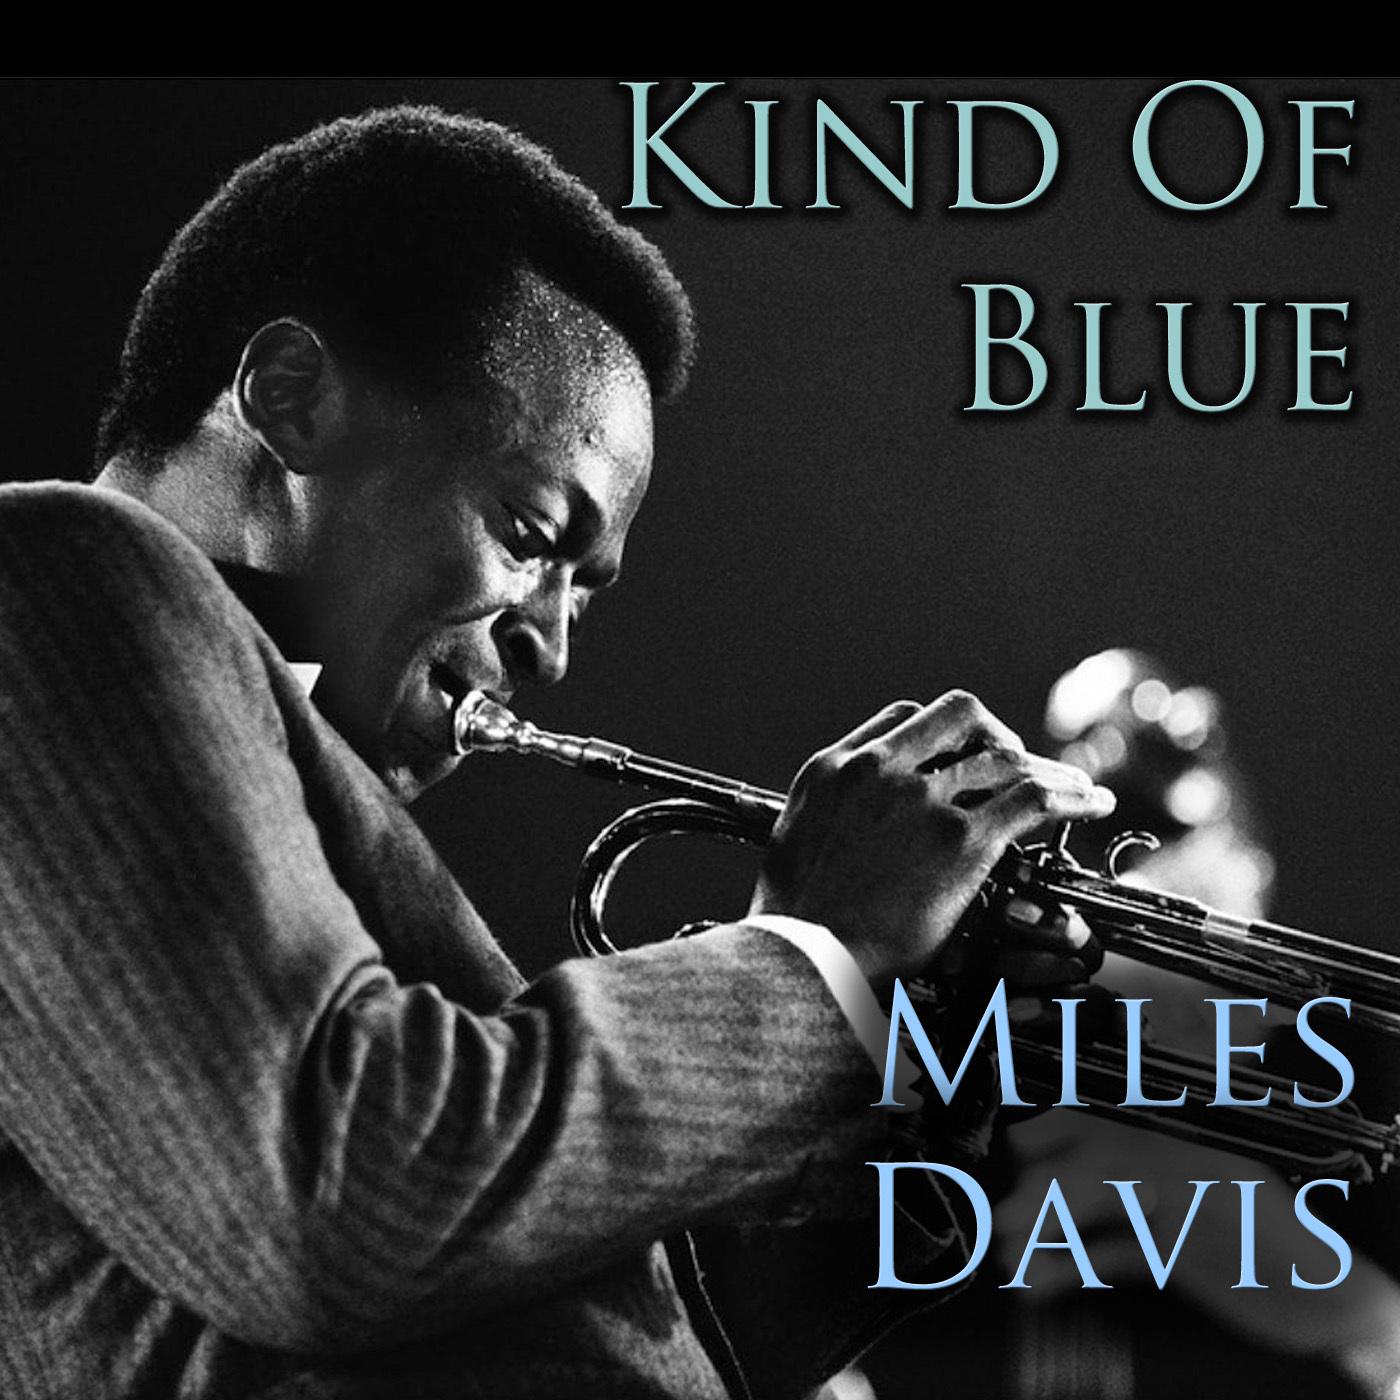 Miles davis blue miles. Miles Davis - kind of Blue (1959). Kind of Blue Майлз Дэвис. Miles Davis kind of Blue обложка. Kind of Blue Майлз Дэвис обложка.